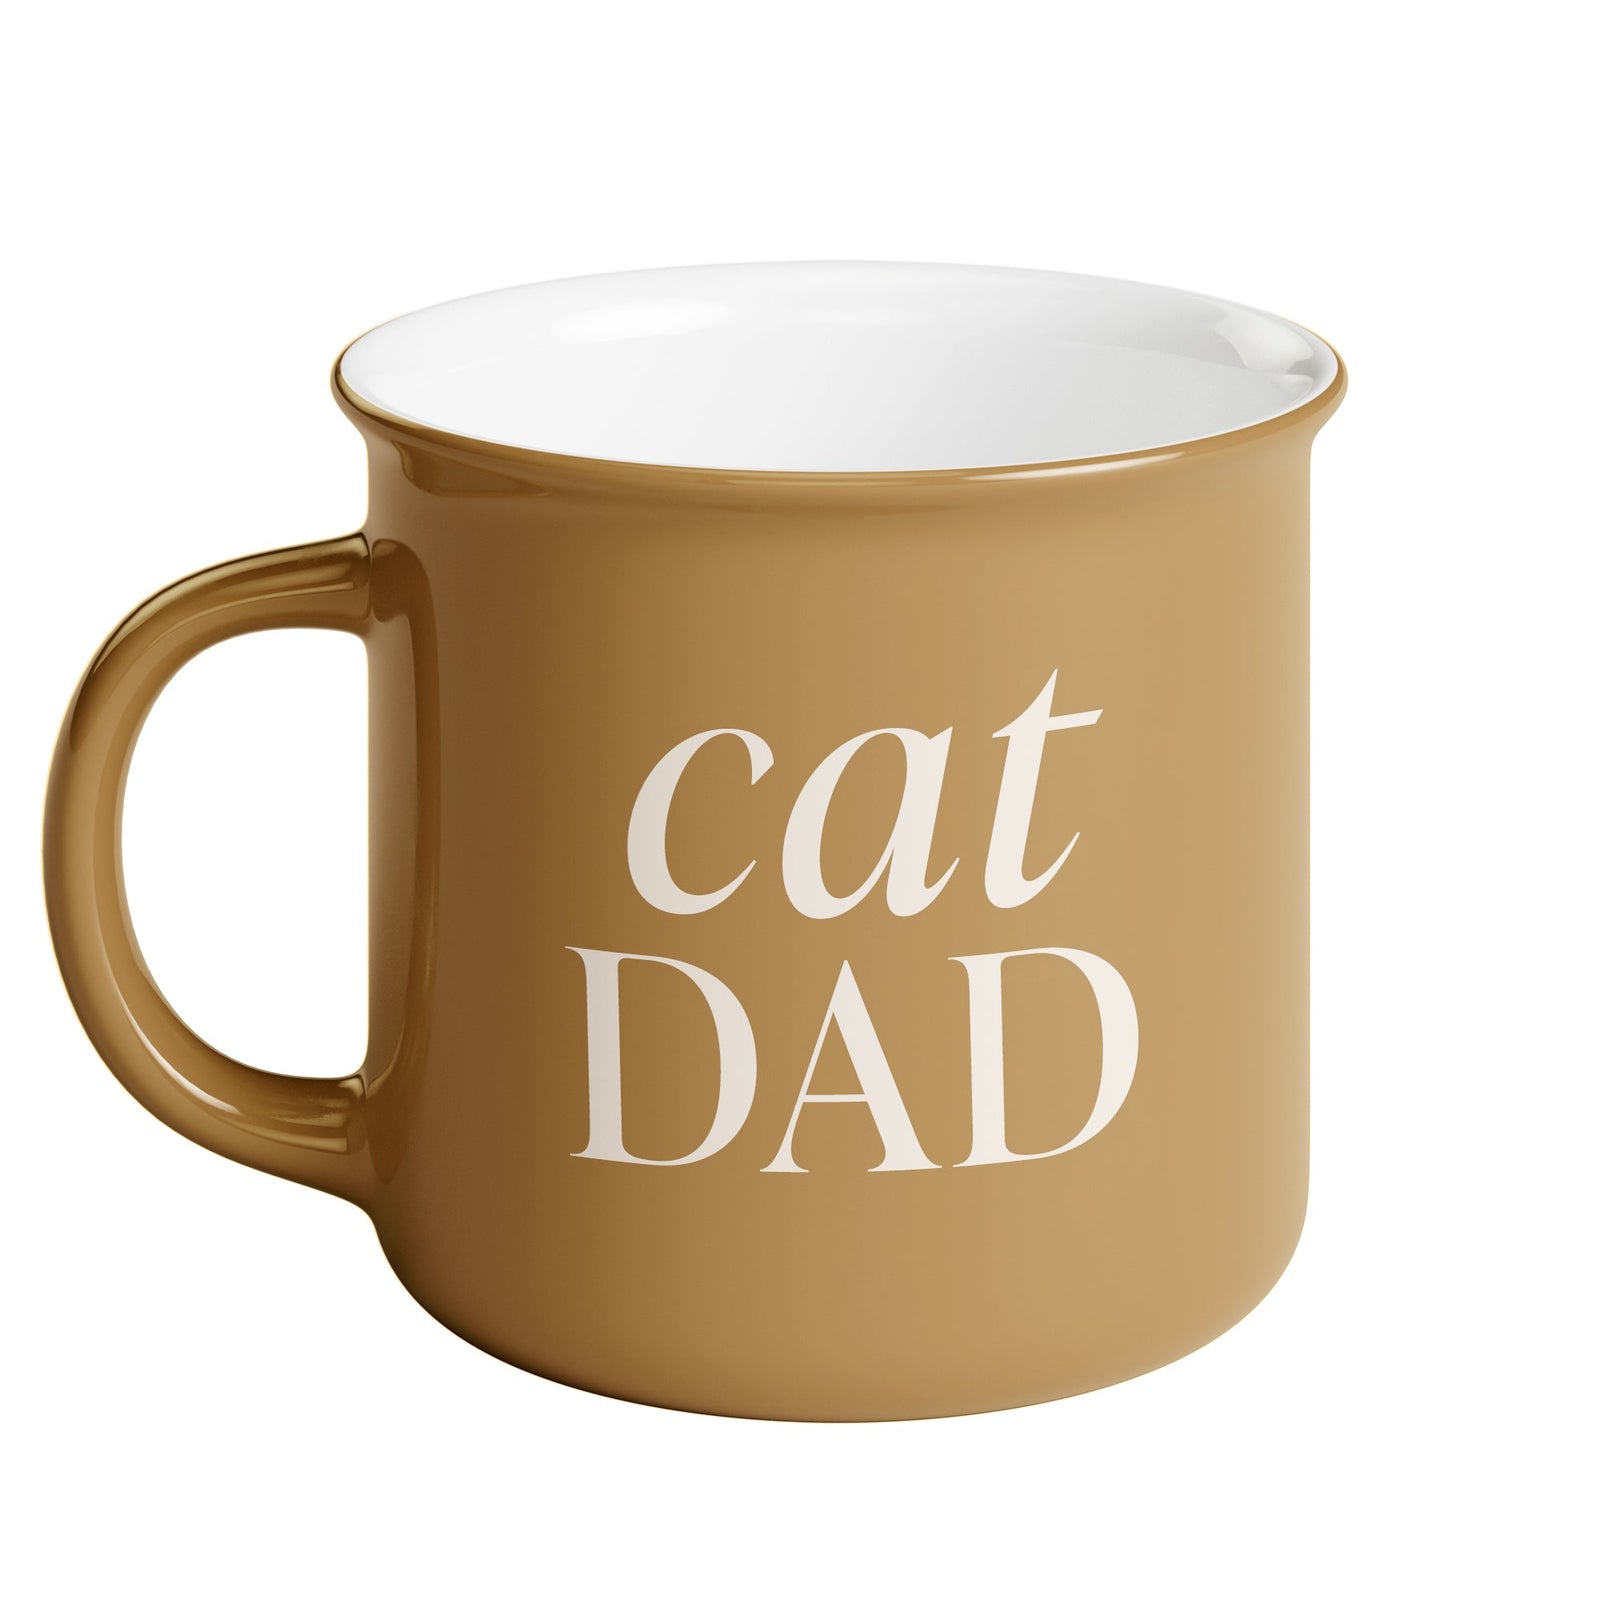 Cat Dad Campfire Coffee Mug